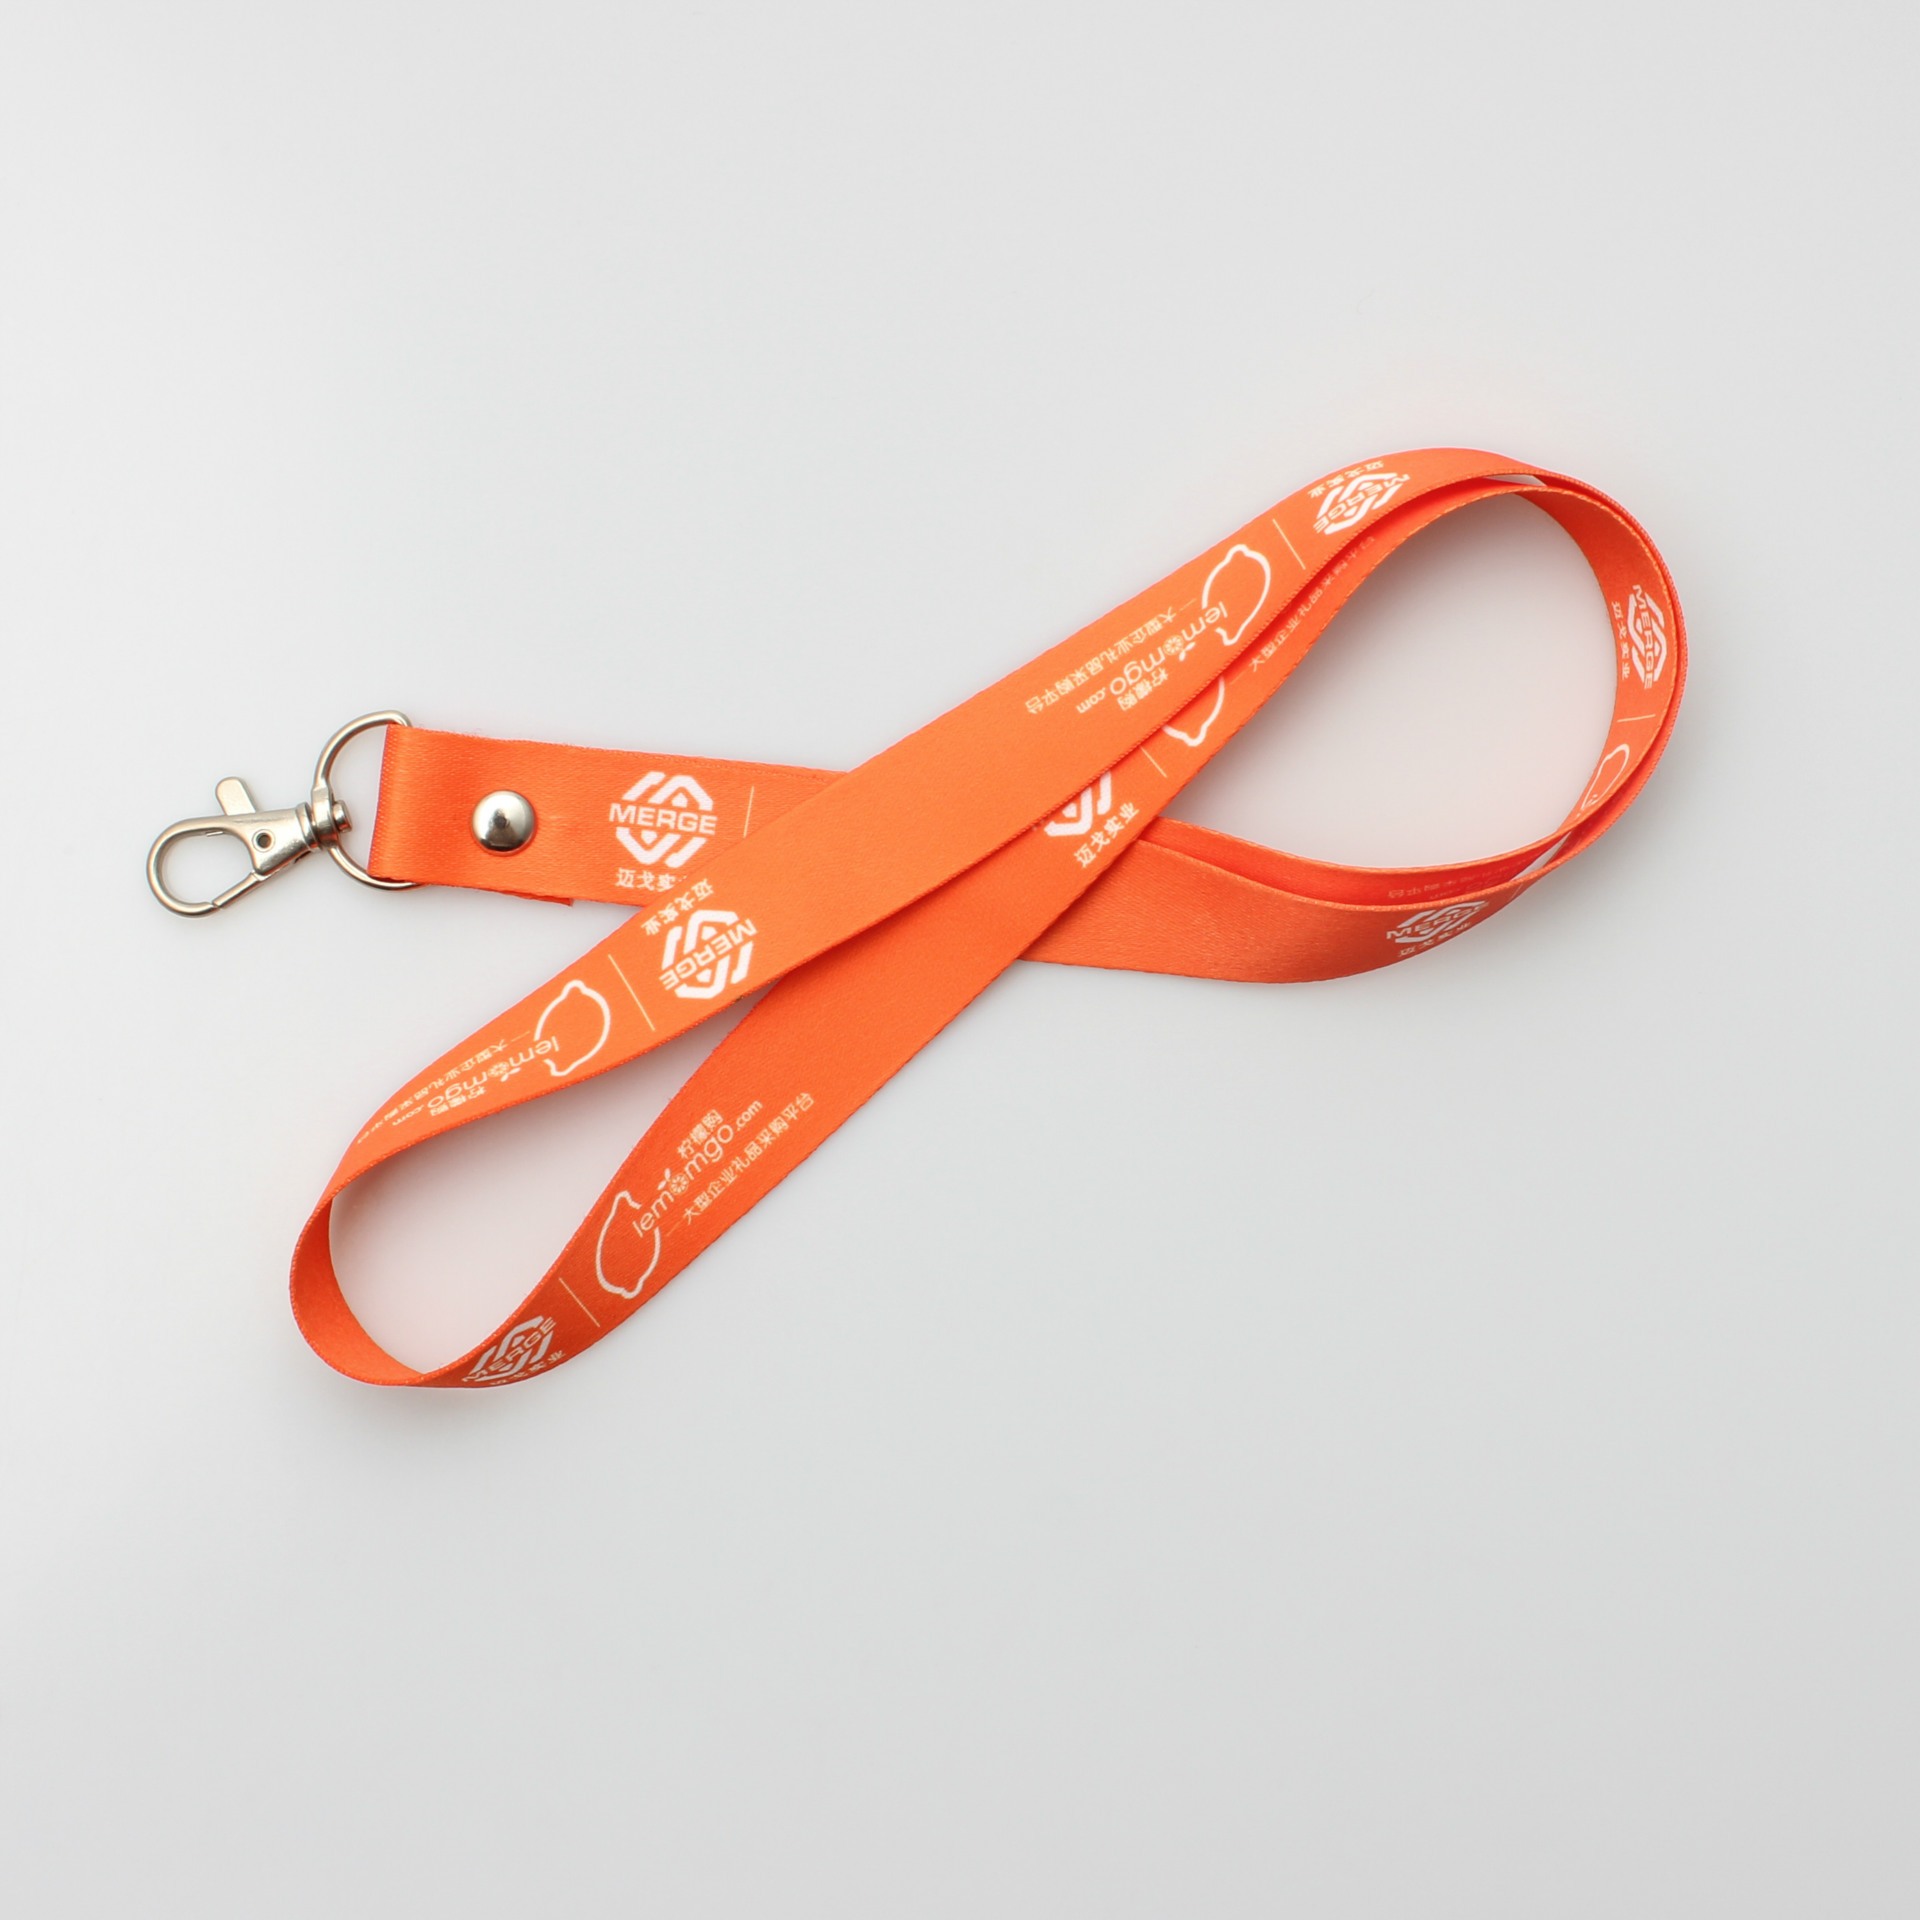 Promotional orange color with hook carabiner customized logo lanyard